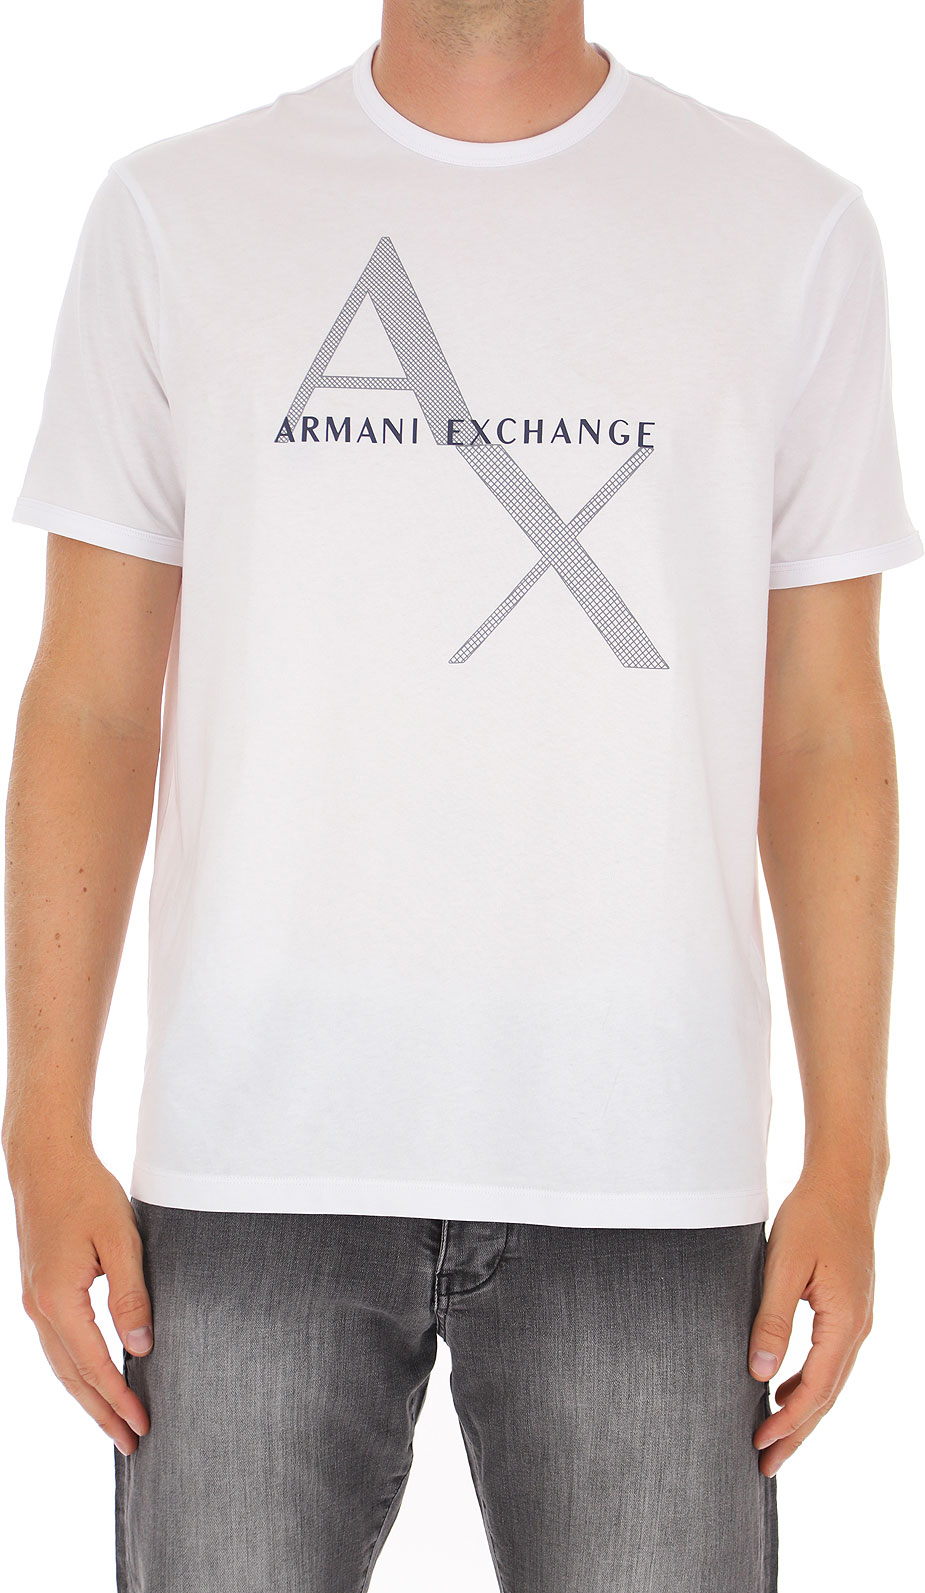 Mens Clothing Armani Exchange, Style code: 8nzt76-z8h4z-1100